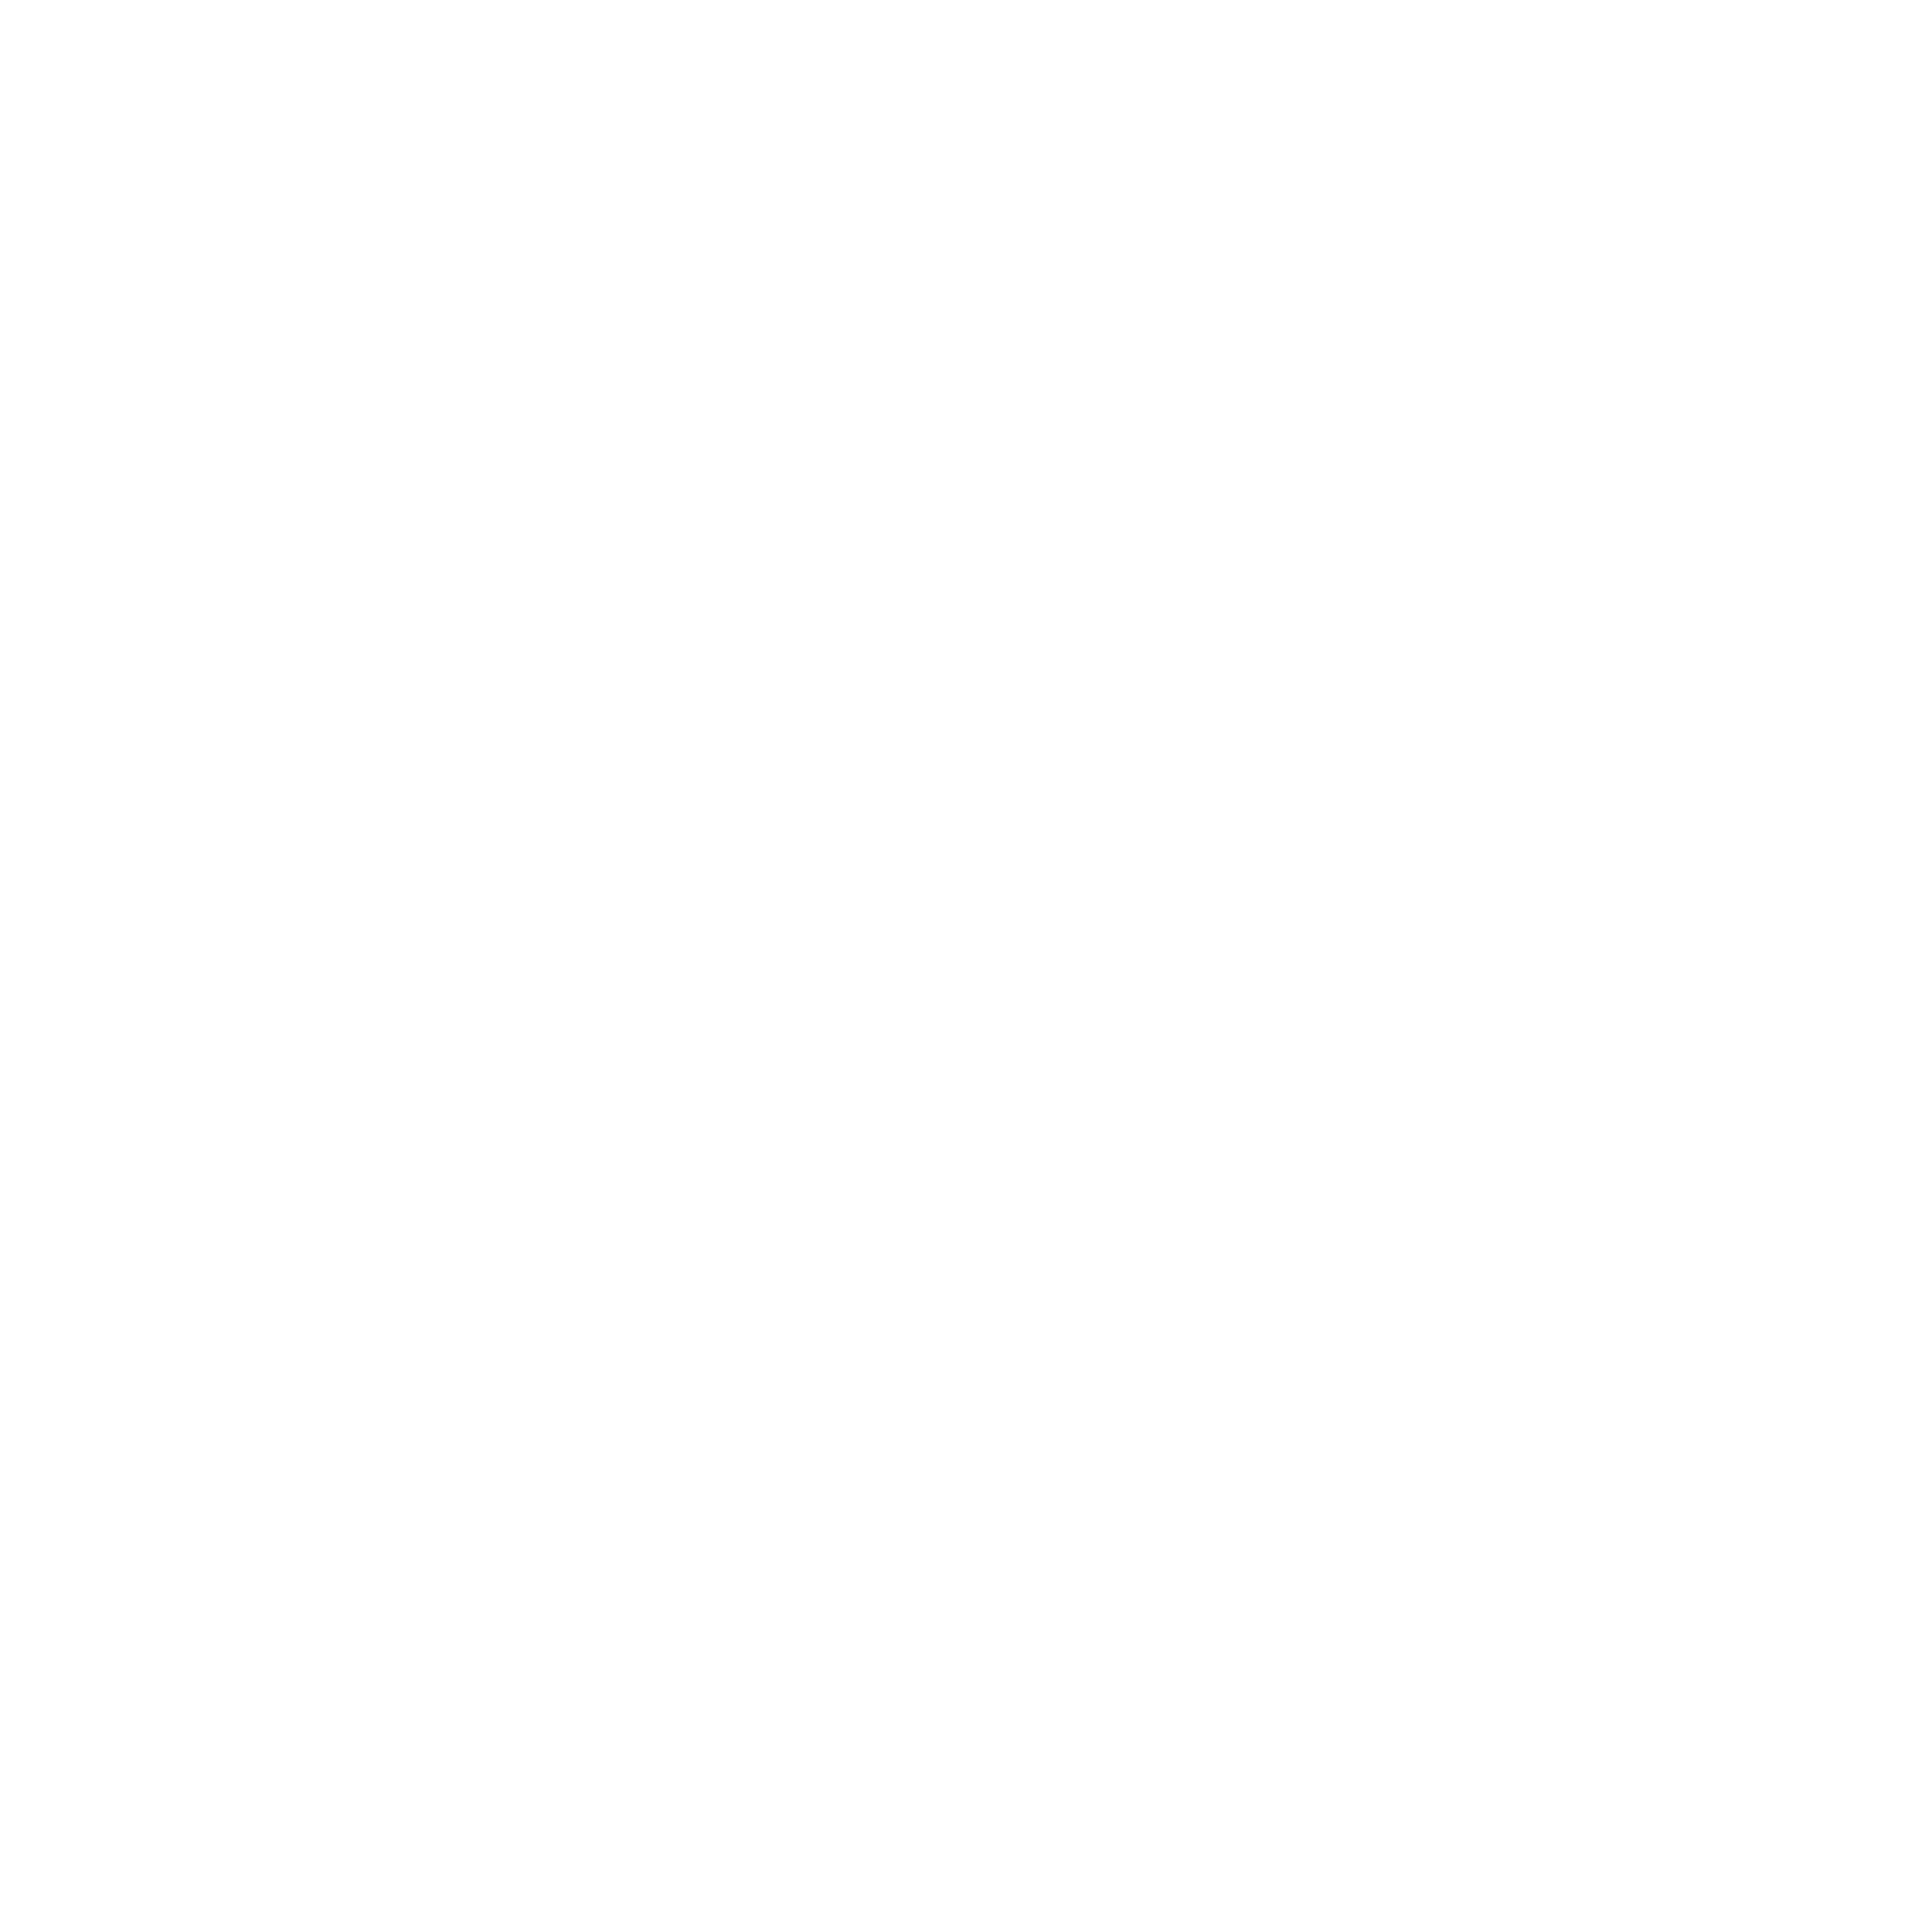 A stylized X (formerly Twitter) logo